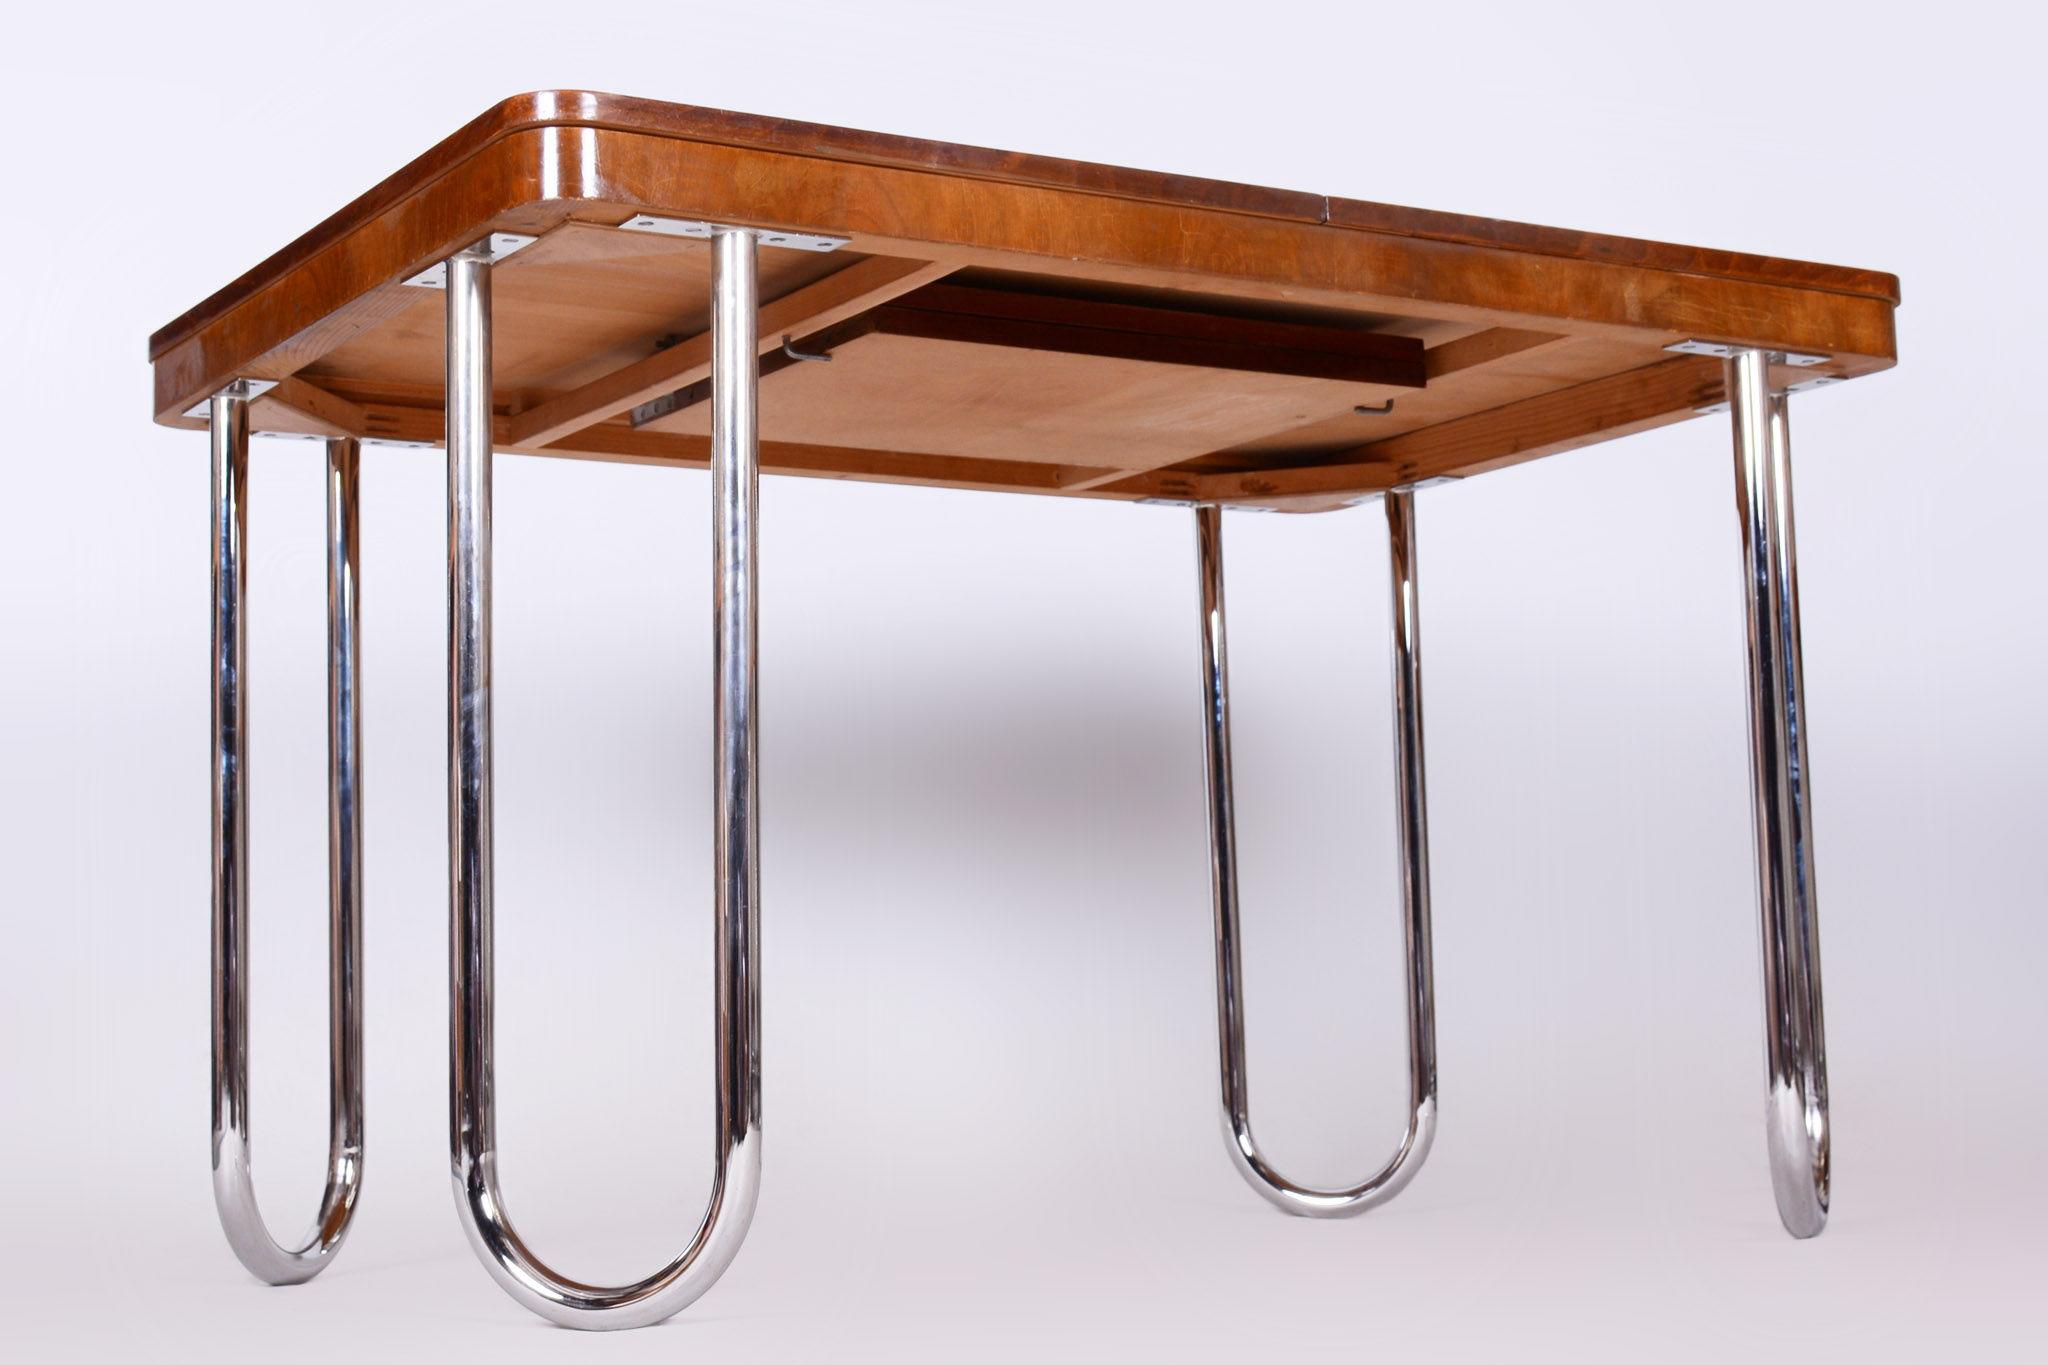 Czech Bauhaus Chrome Folding Dining Table by Halabala, 1930s, Restored, Walnut For Sale 6